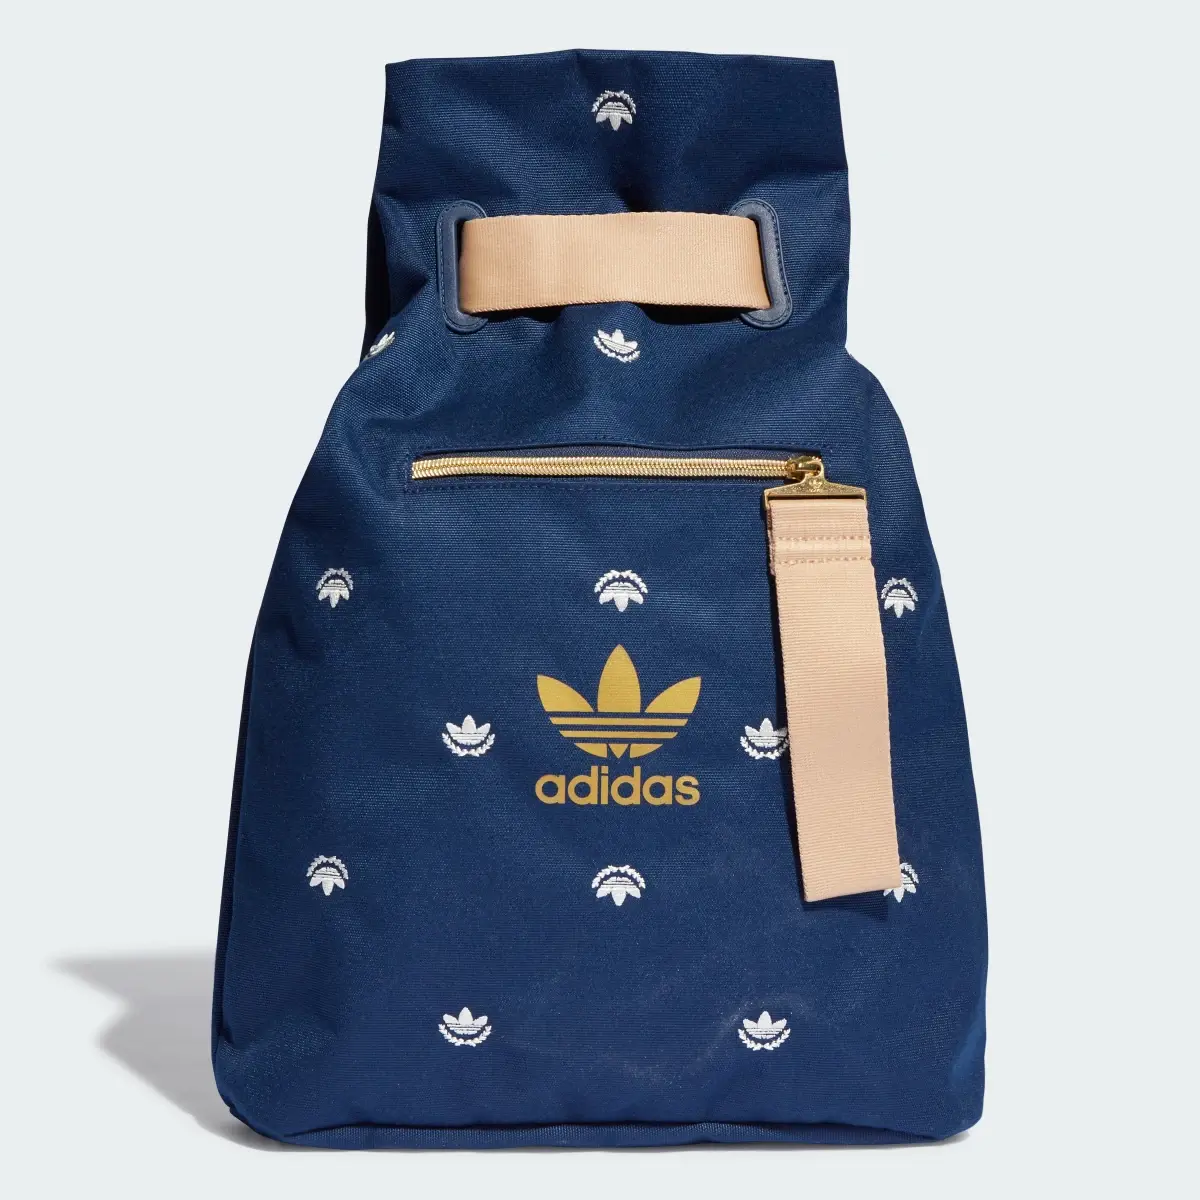 Adidas Trefoil Crest Bucket Backpack. 2